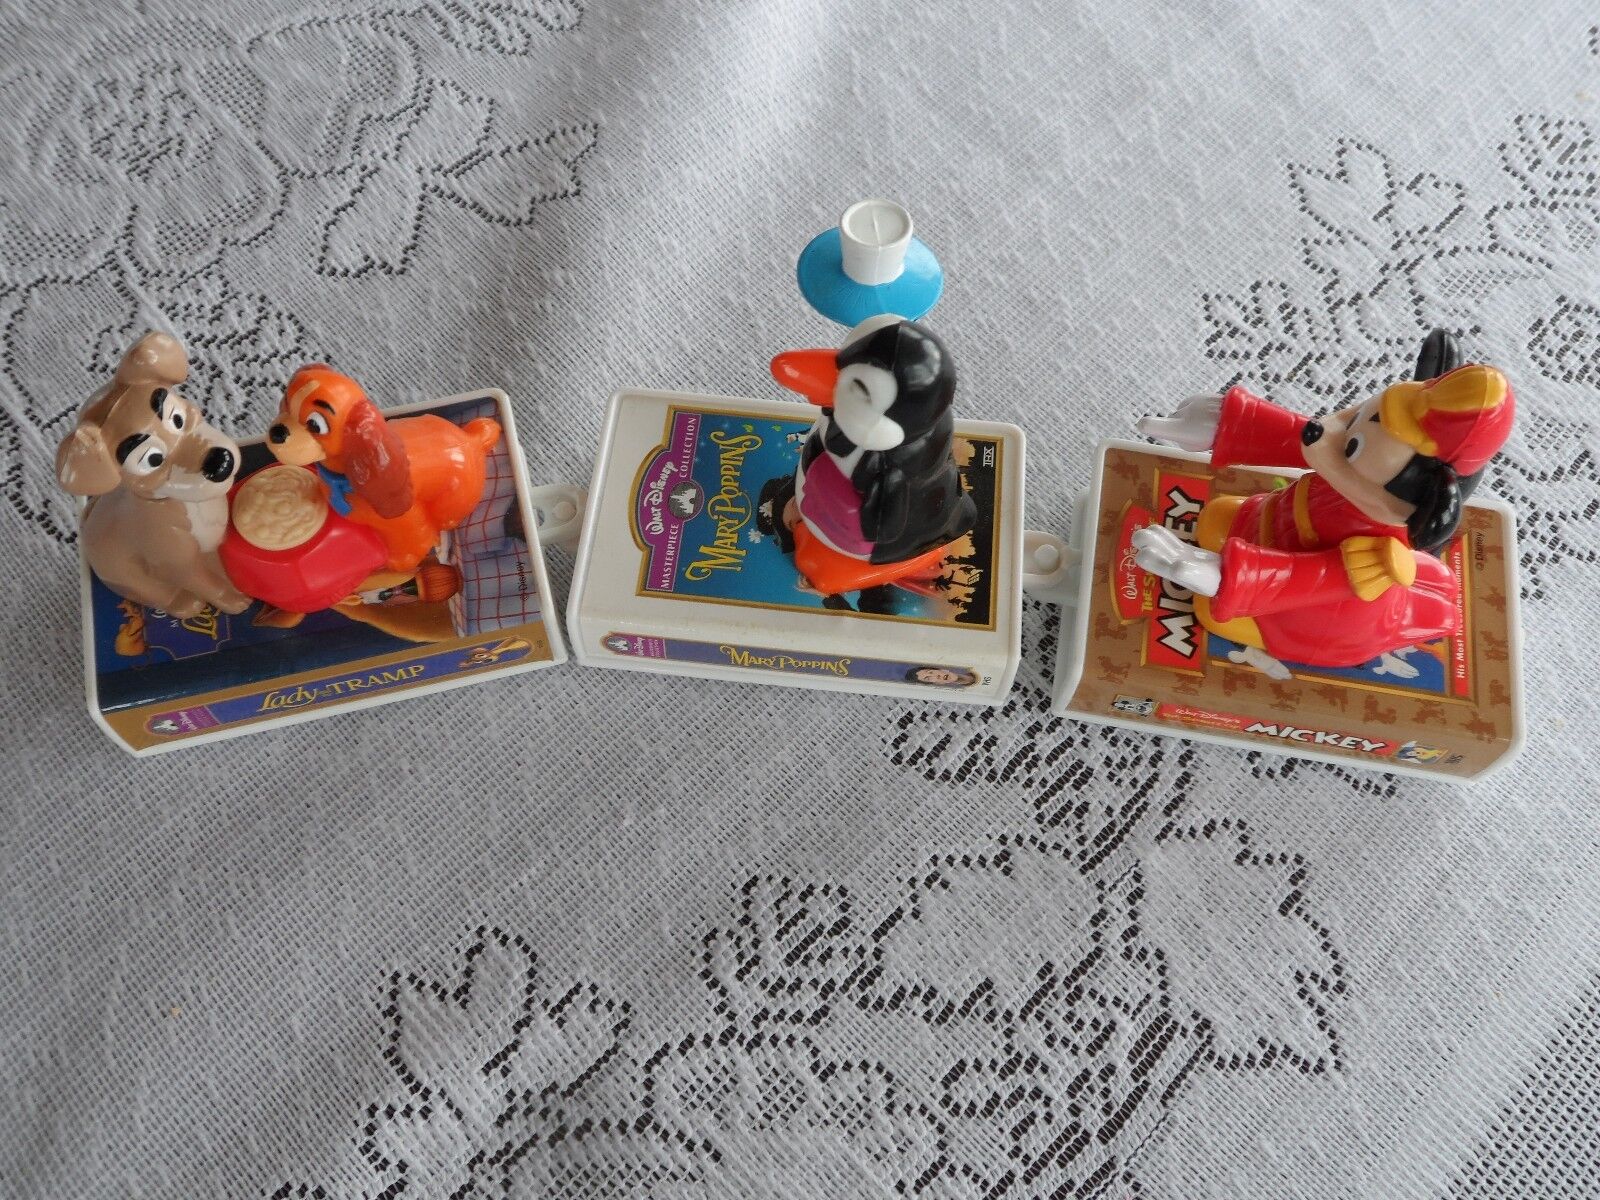 McDonalds Disney Video Masterpiece Train Toy 3pc Set Mickey Mary Poppins VHS EUC